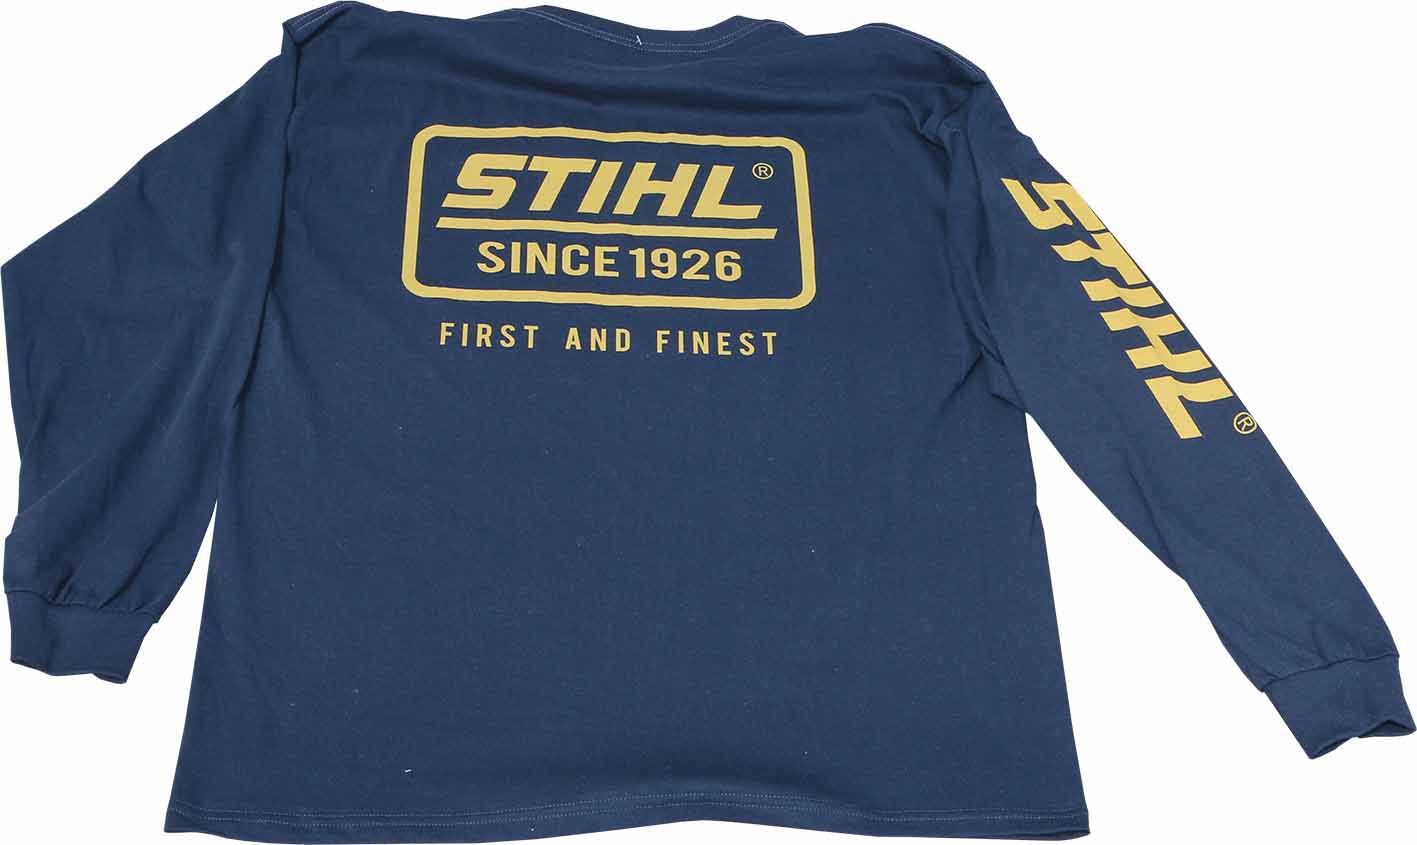 STIHL Since 1926 Long Sleeve Shirt